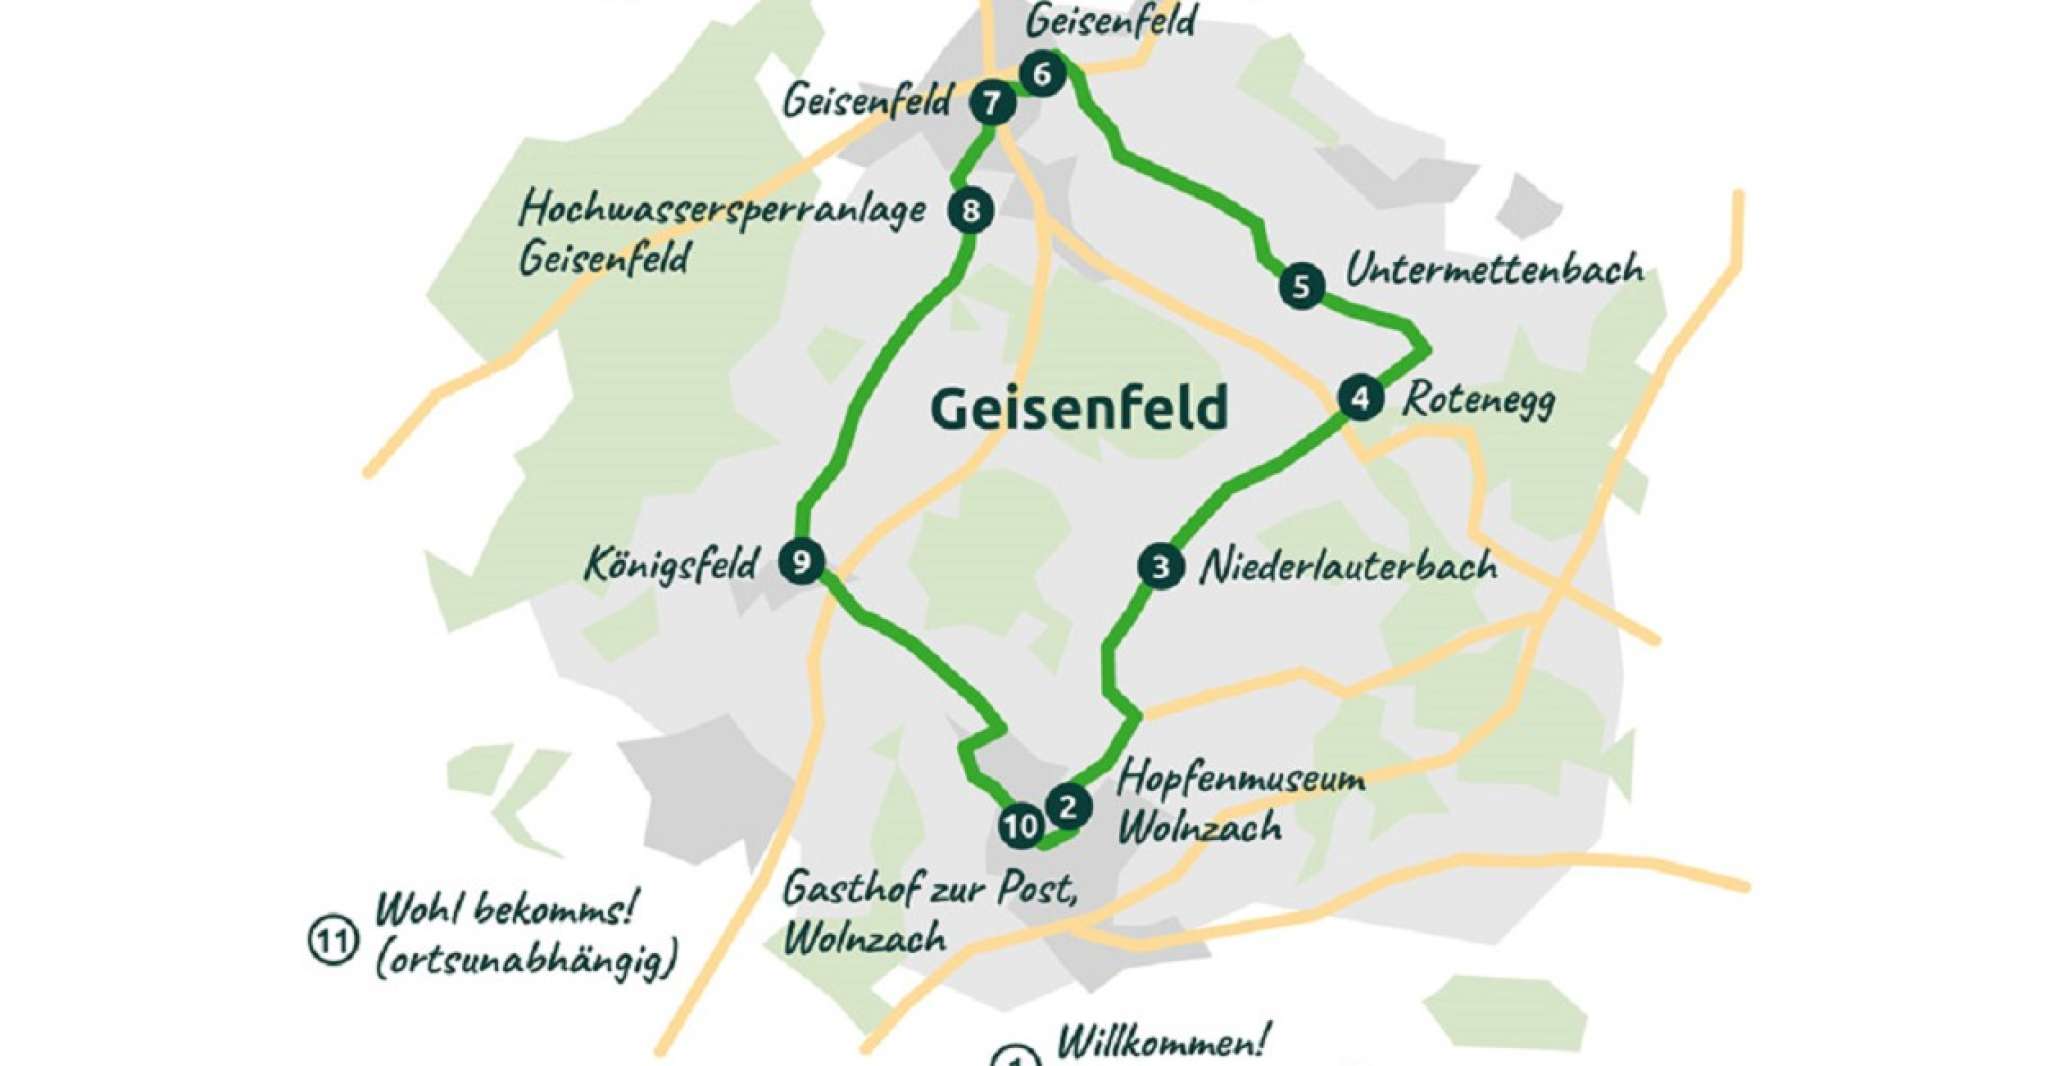 Interactive bike tour | Hops and malt (Pfaffenhofen a.d.ilm) - Housity